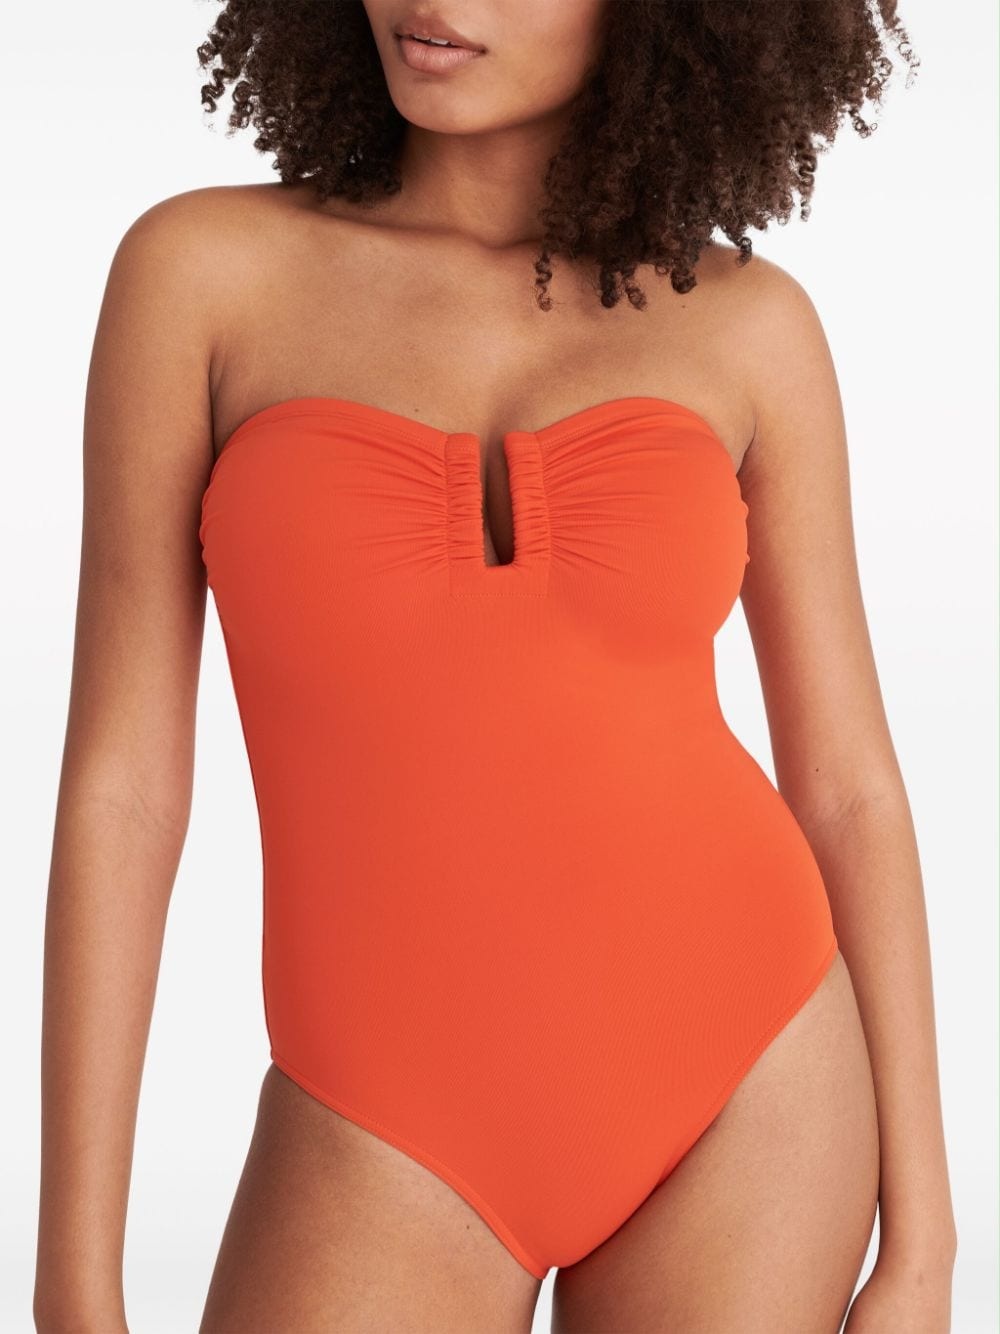 CassiopÃ©e strapless swimsuit - 6